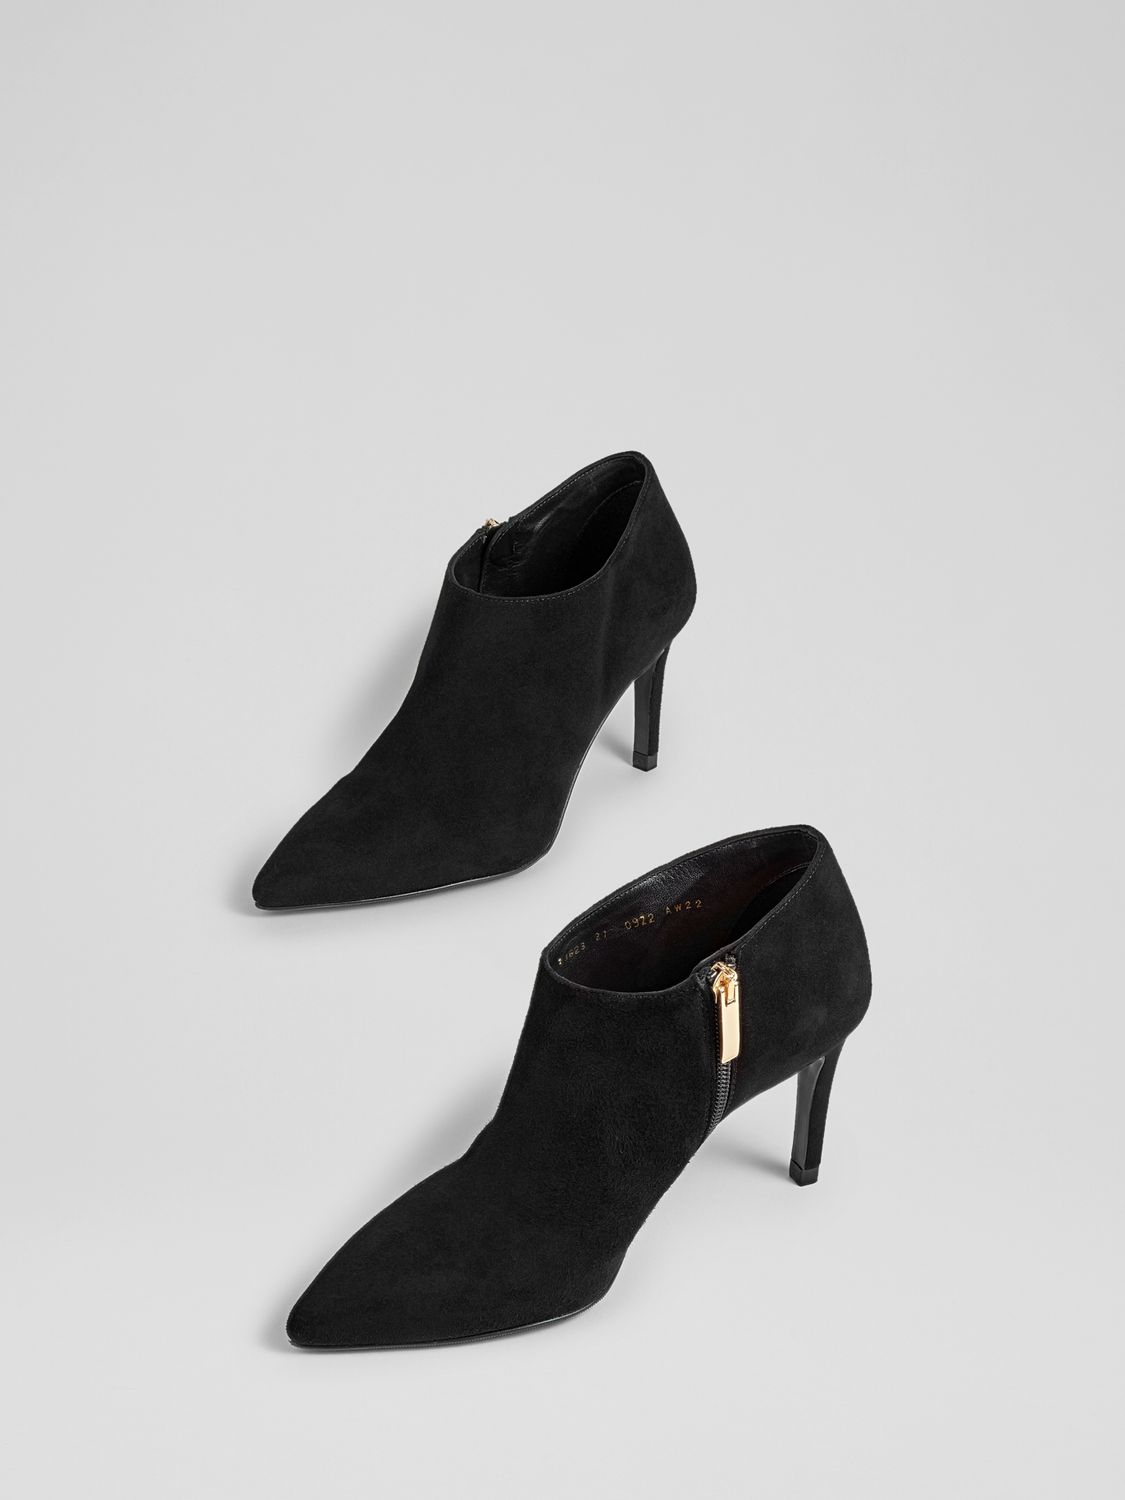 L.K.Bennett Elle Suede Shoe Boots, Black, 7